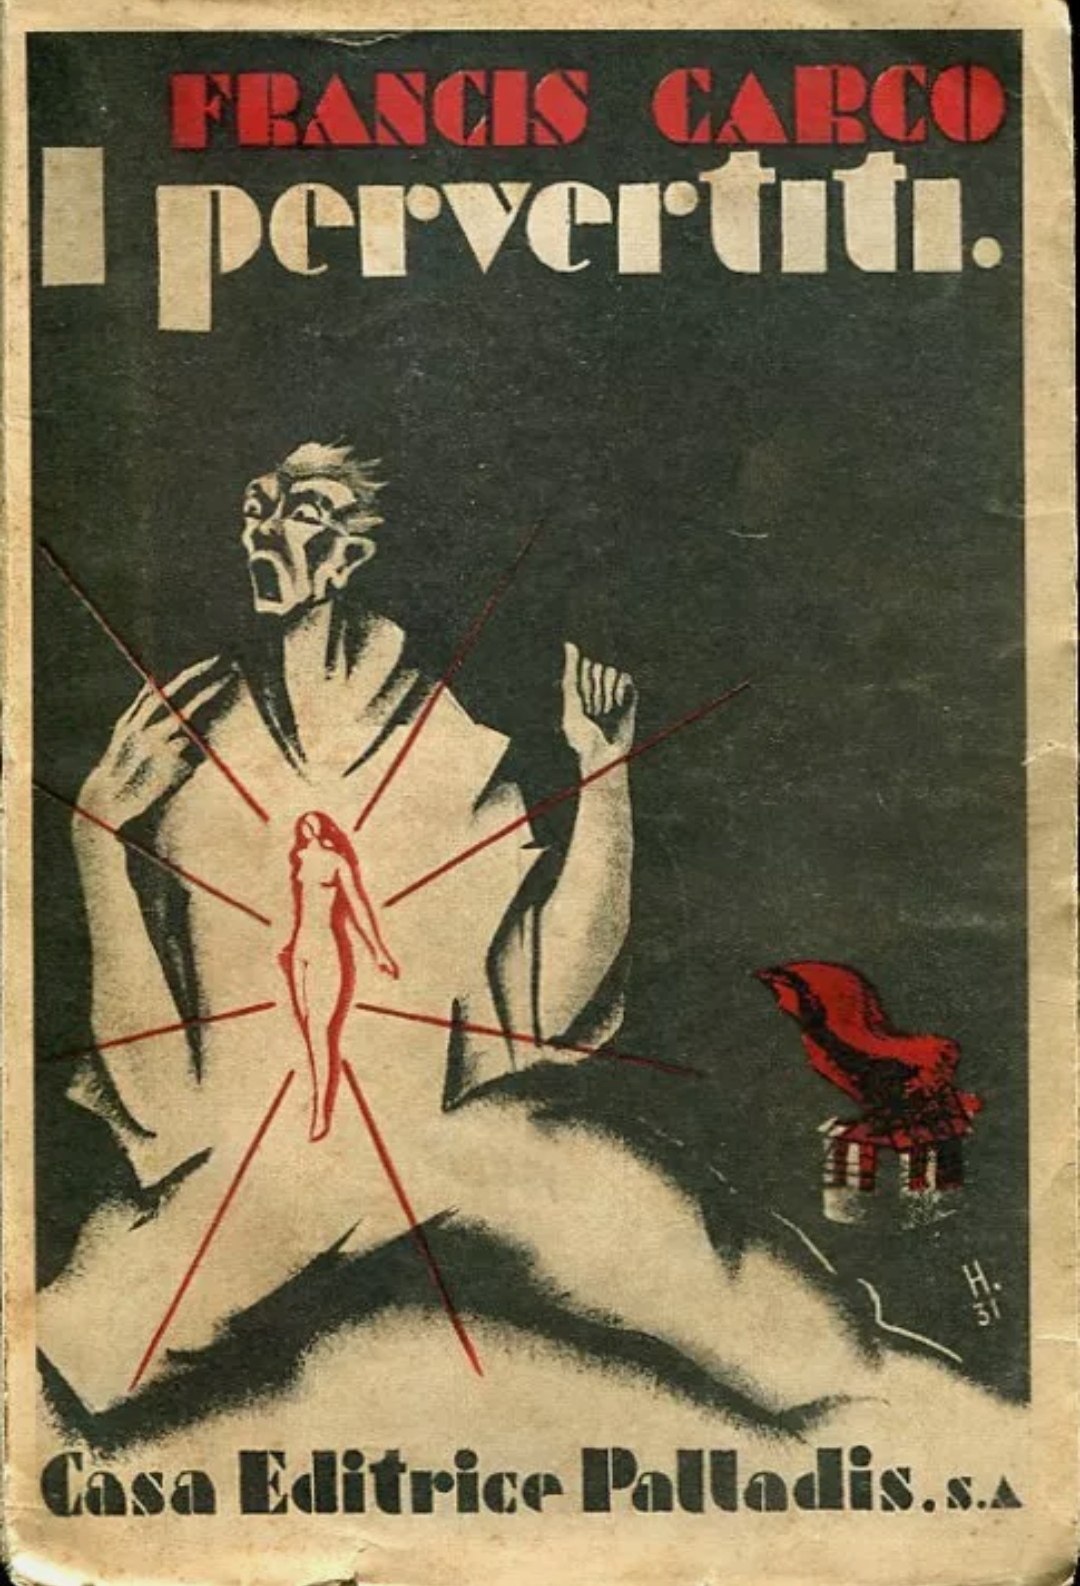 FRANCIS CARCO I PERVERTITI (1930) LIVRE EN ITALIEN 1930